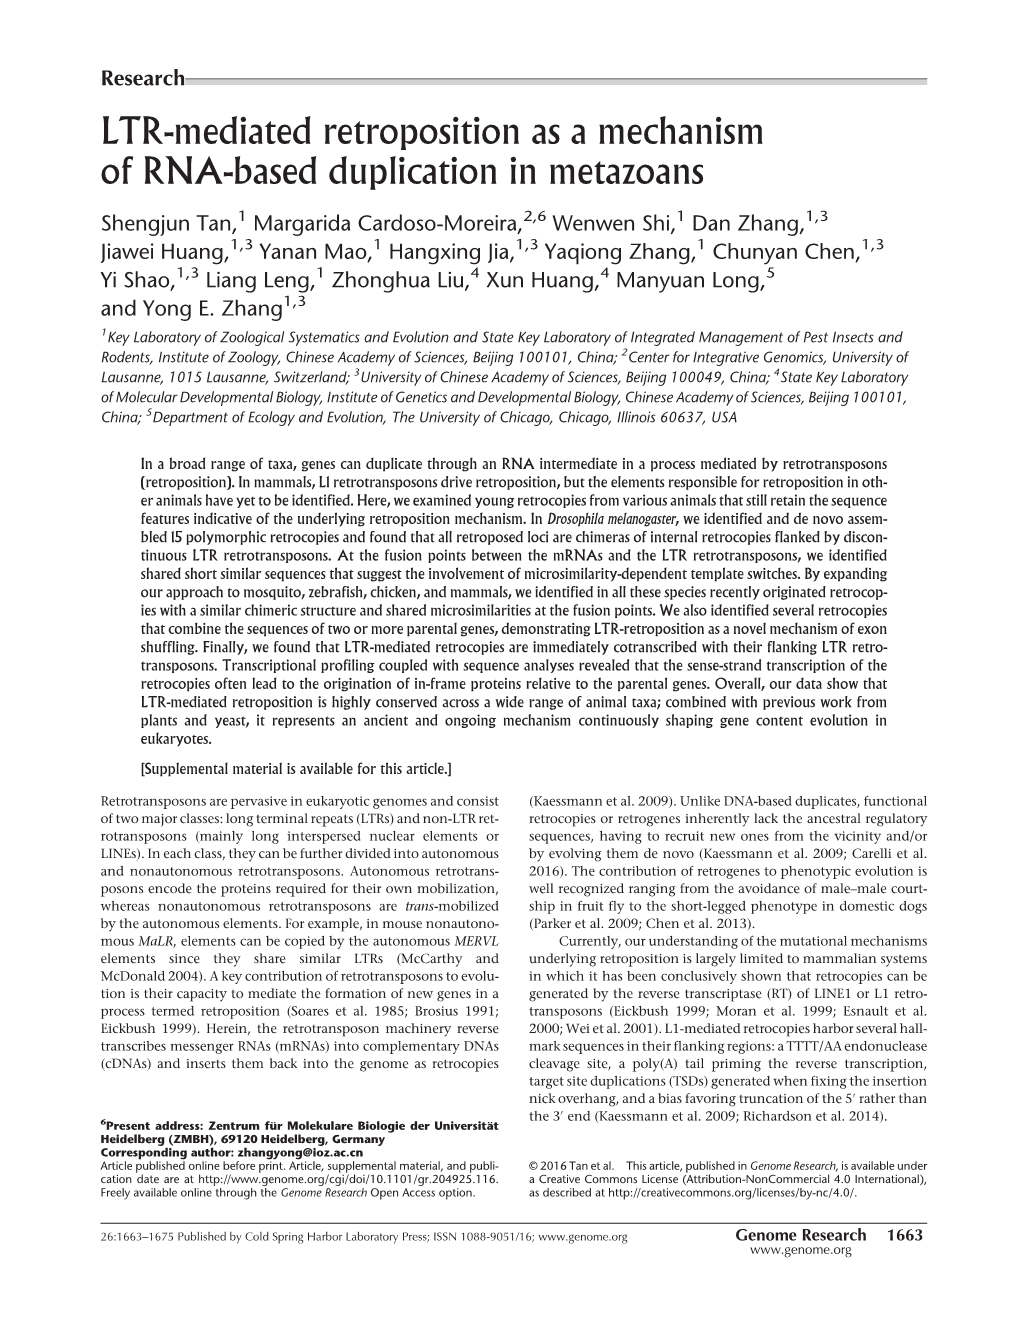 LTR-Mediated Retroposition As a Mechanism of RNA-Based Duplication in Metazoans